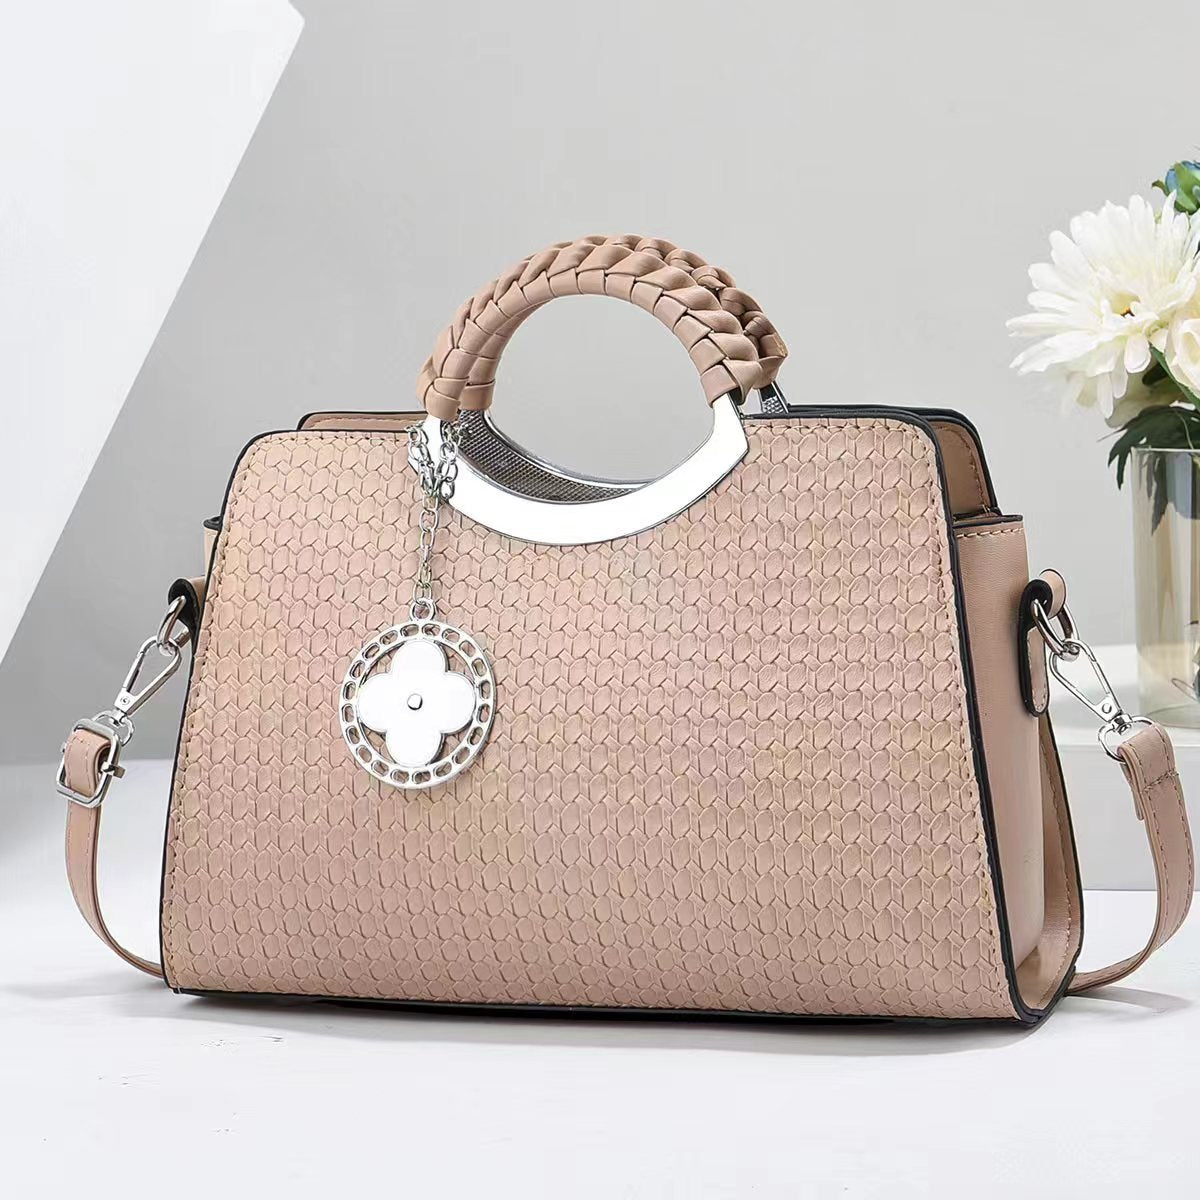 Trendy foreign style ladies fashionable and elegant simple single shoulder crossbody handbag